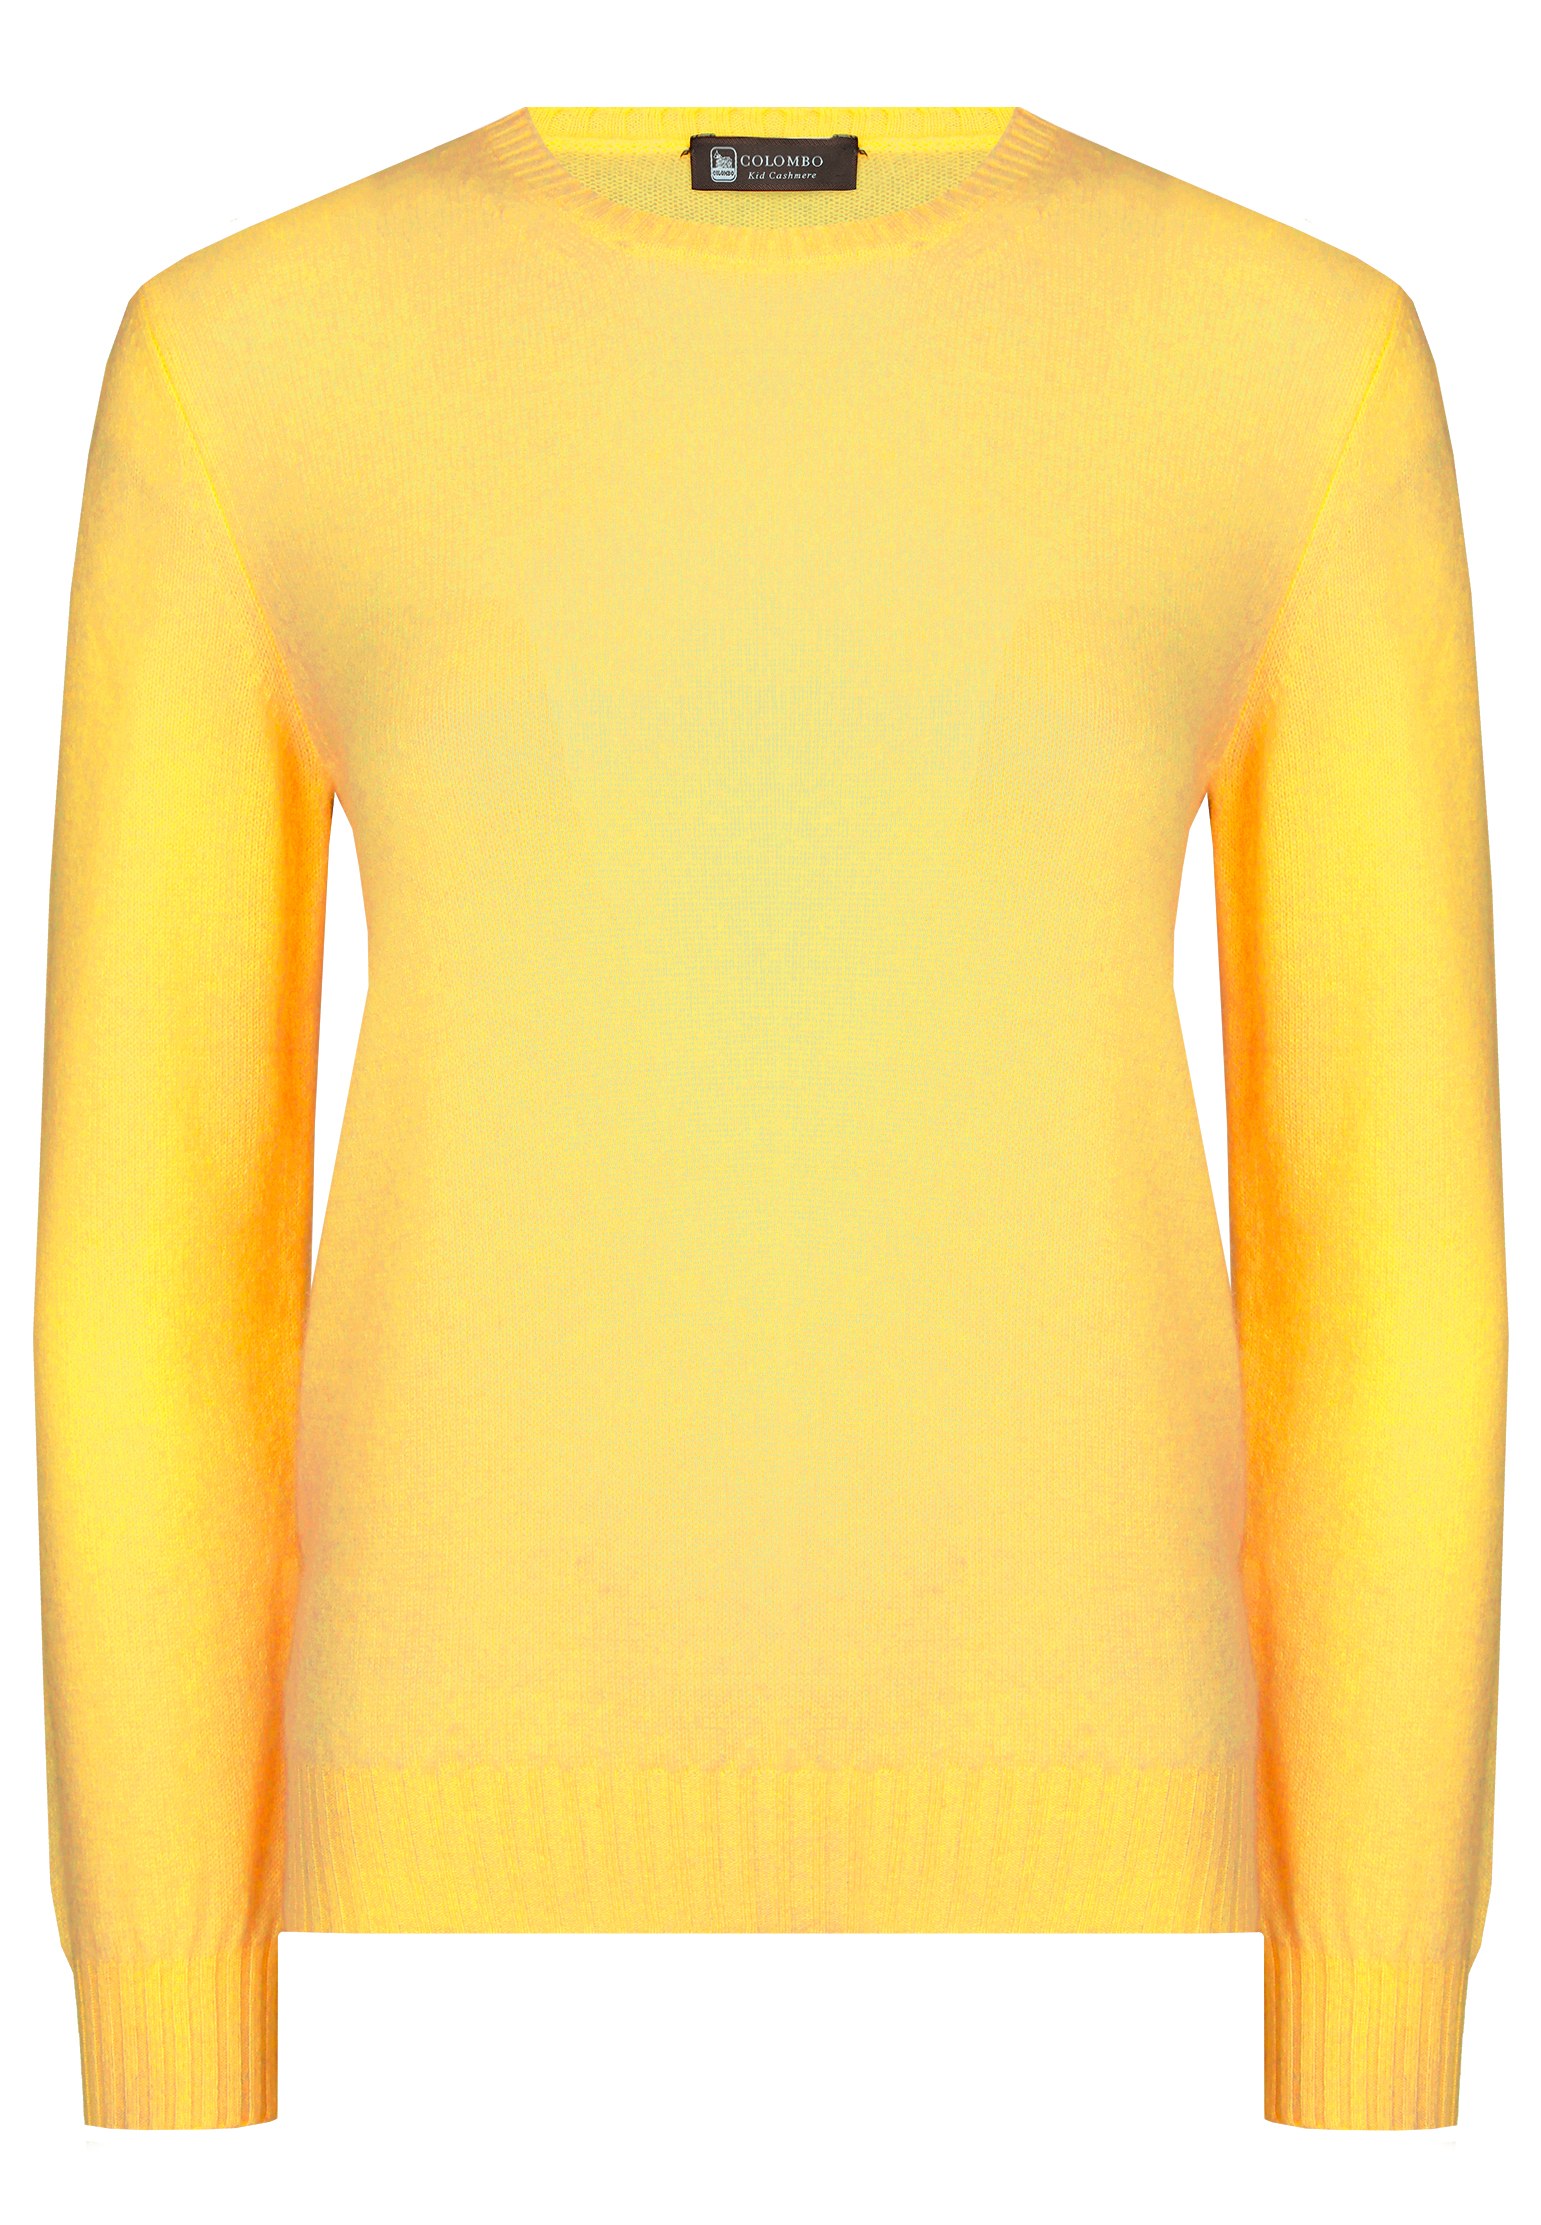 Джемпер COLOMBO желтого цвета